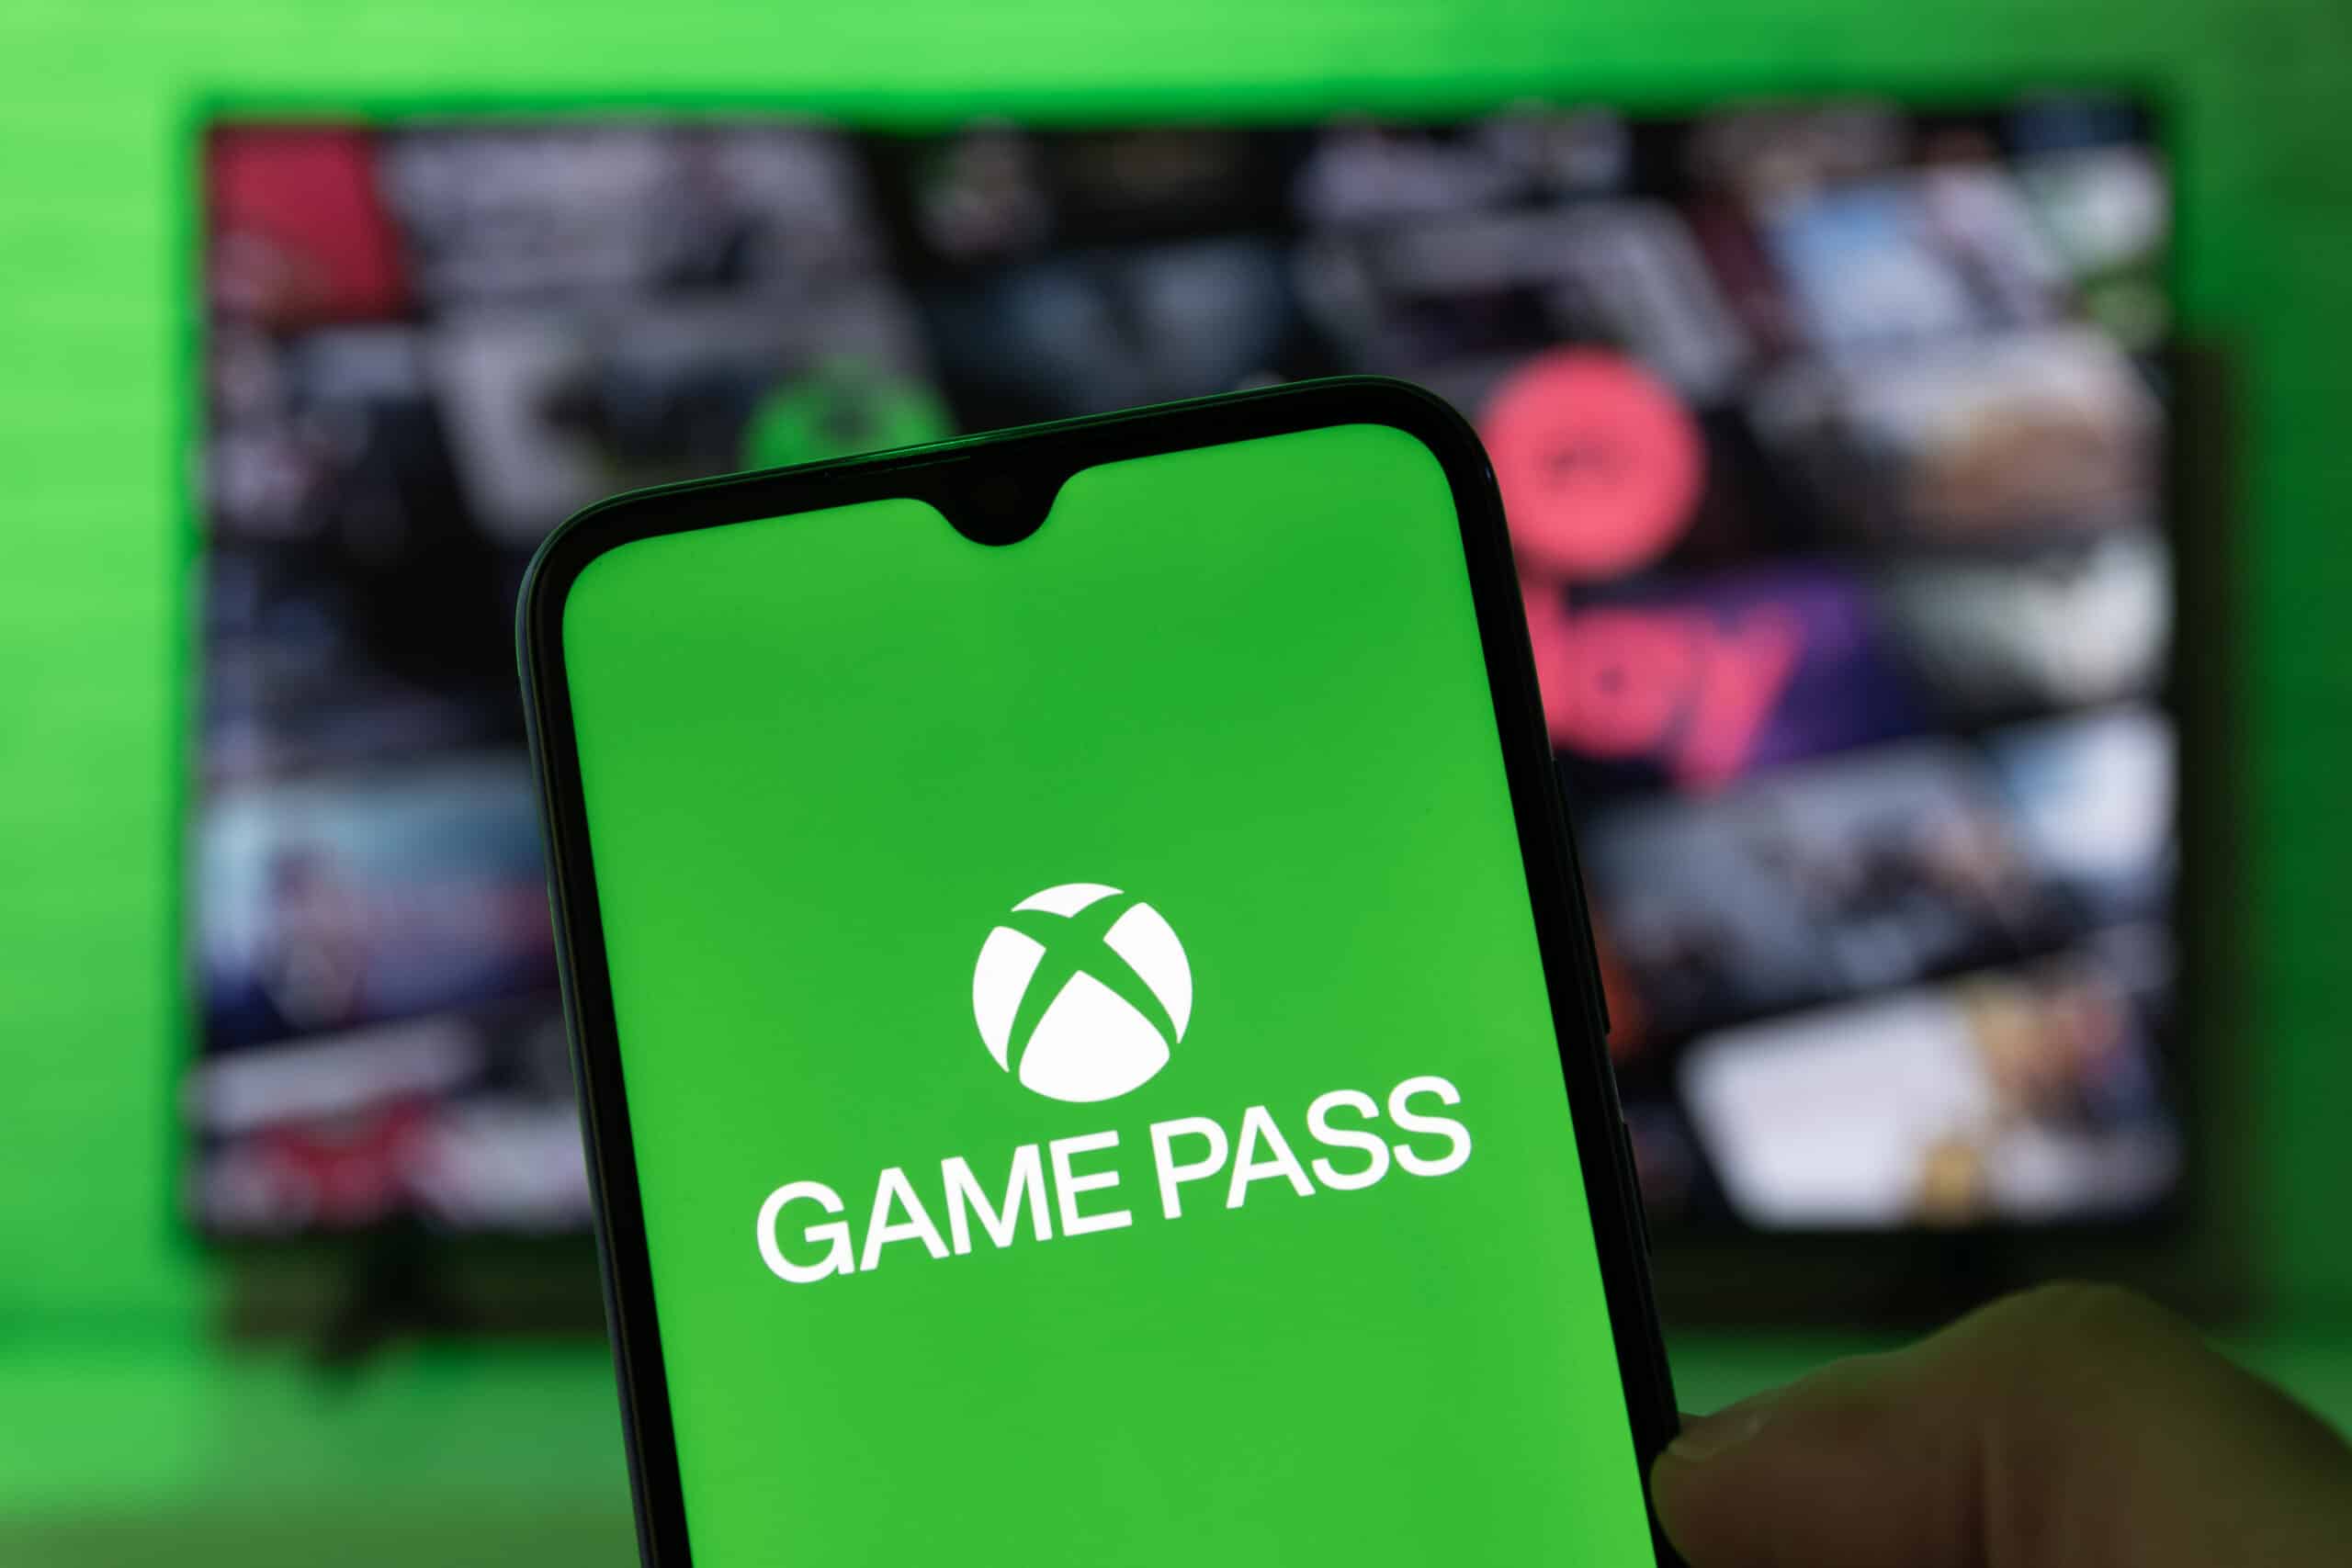 Microsoft won't immediately raise Xbox Game Pass price if